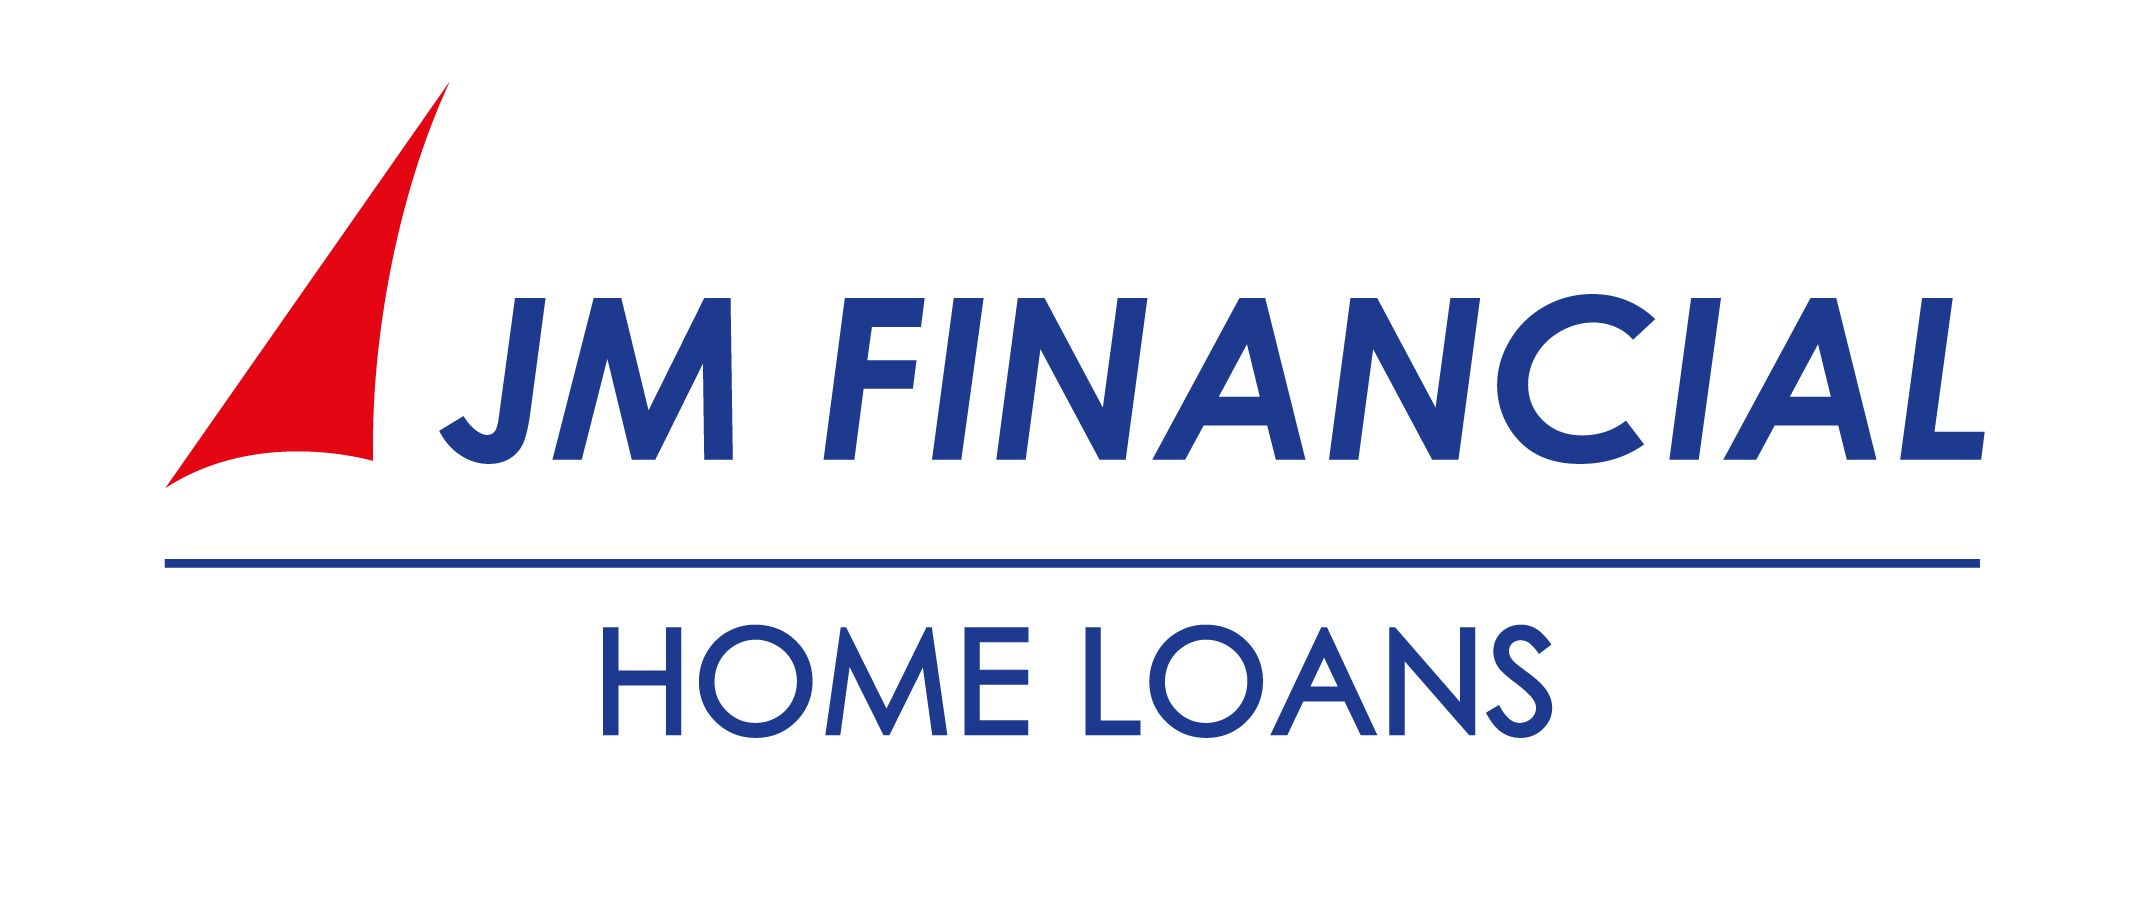 JM Financial Home Loans Ltd.